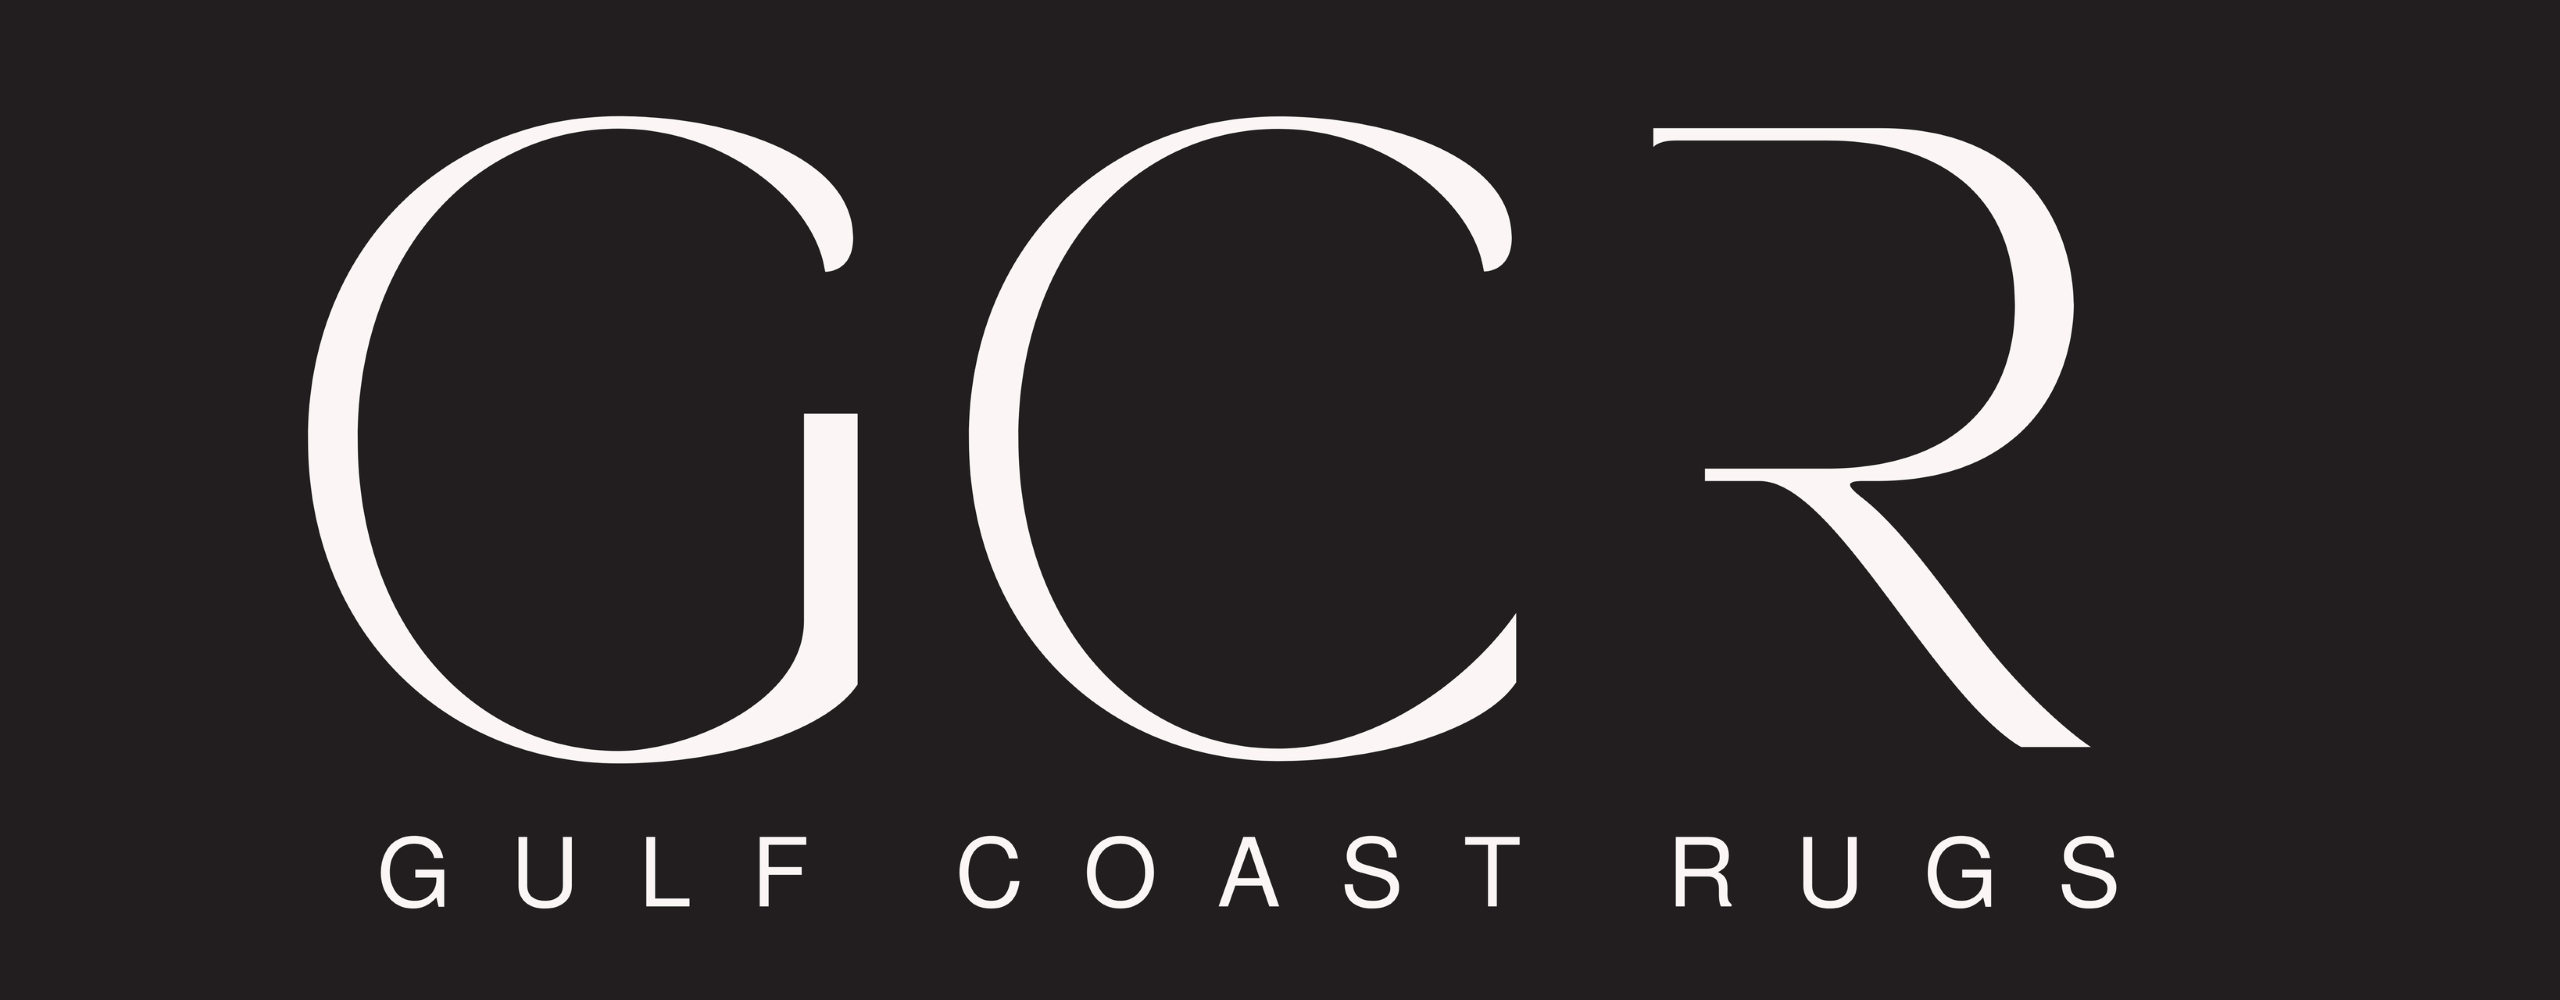 Gulf Coast Rugs Logo